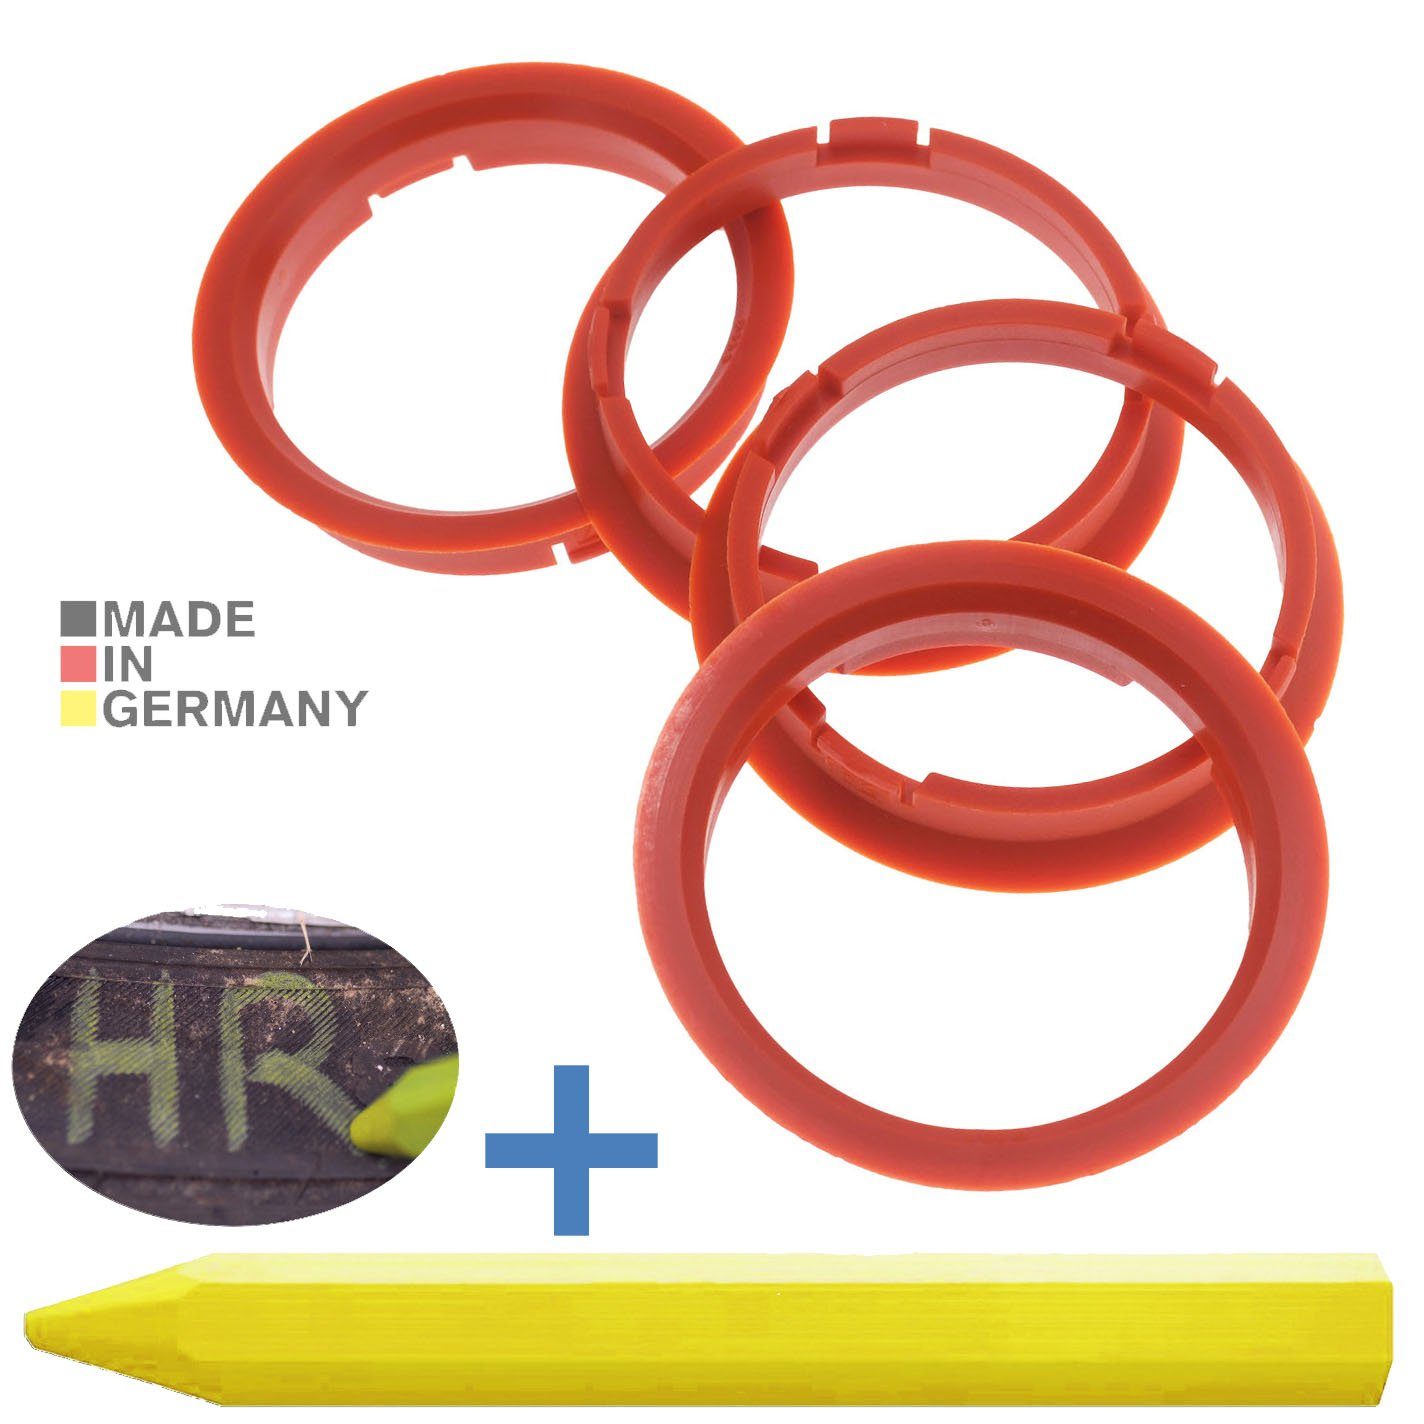 RKC Reifenstift 4X Zentrierringe Orange Felgen Ringe + 1x Reifen Kreide Fett Stift, Maße: 74,1 x 66,6 mm